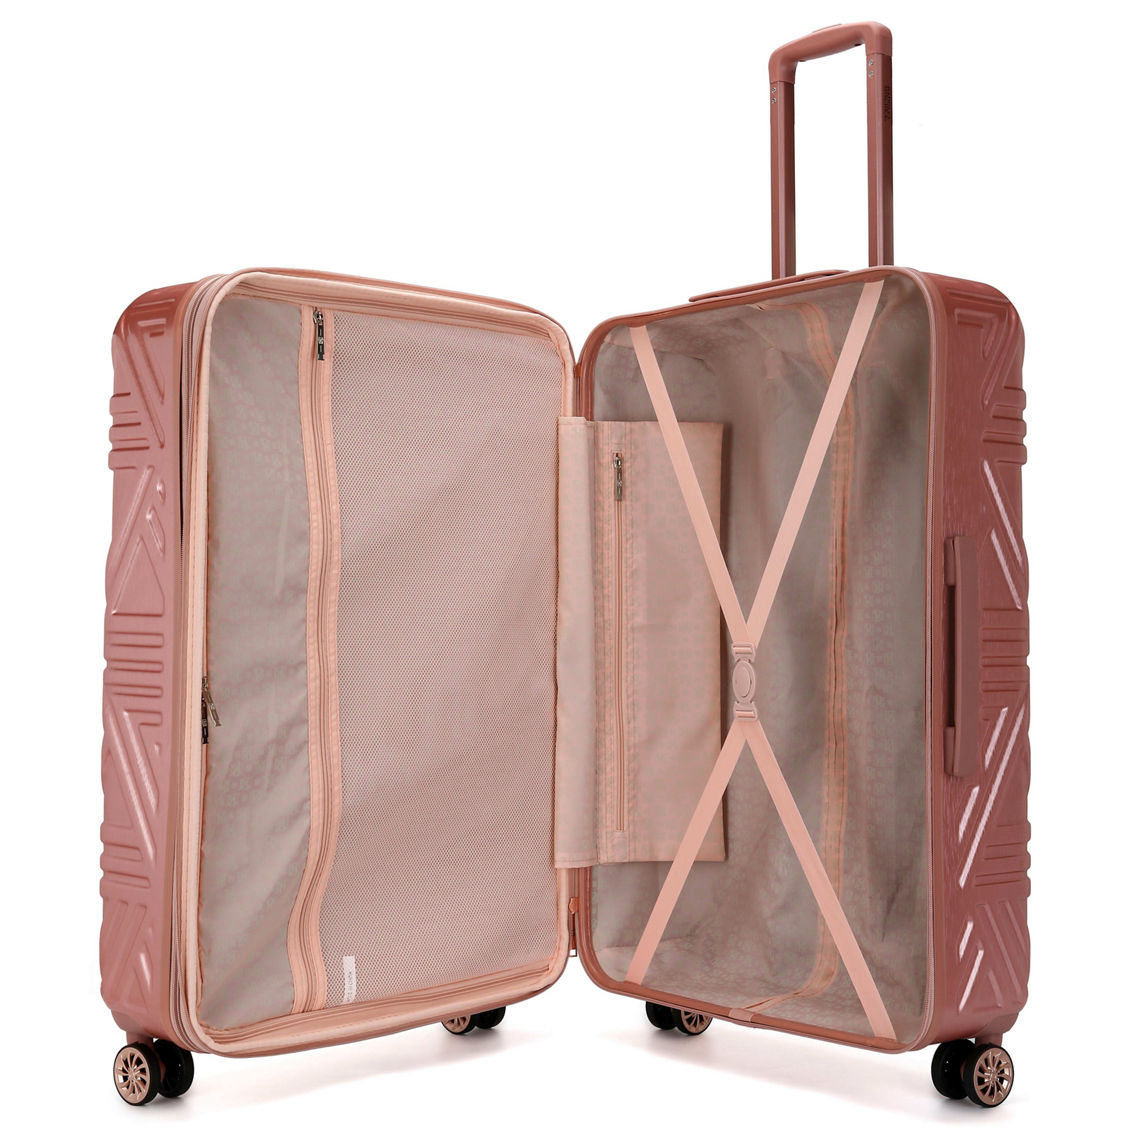 BADGLEY MISCHKA Contour 3 Piece Expandable Spinner Luggage Set - Image 2 of 5